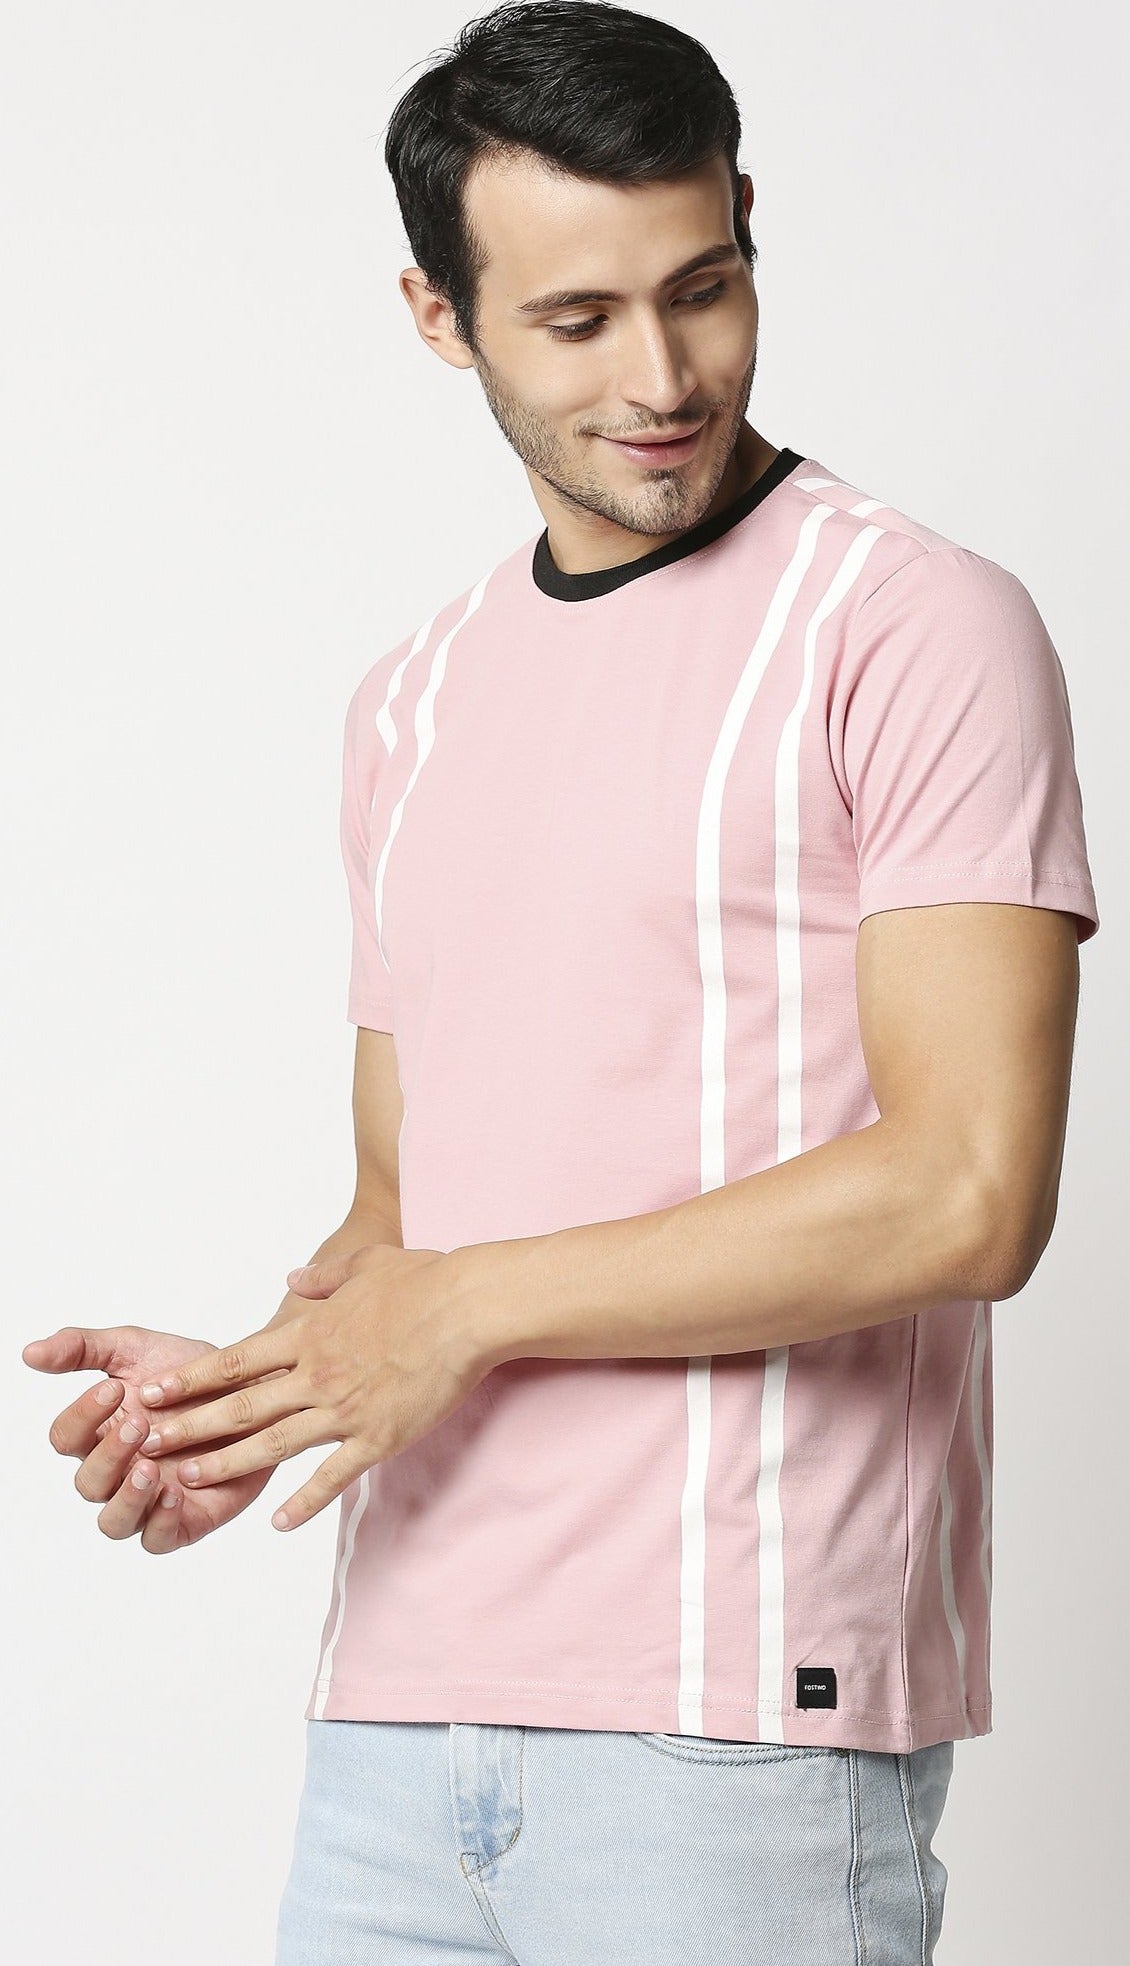 Fostino Suspender Pink Round Neck T-Shirt - Fostino - T-Shirts